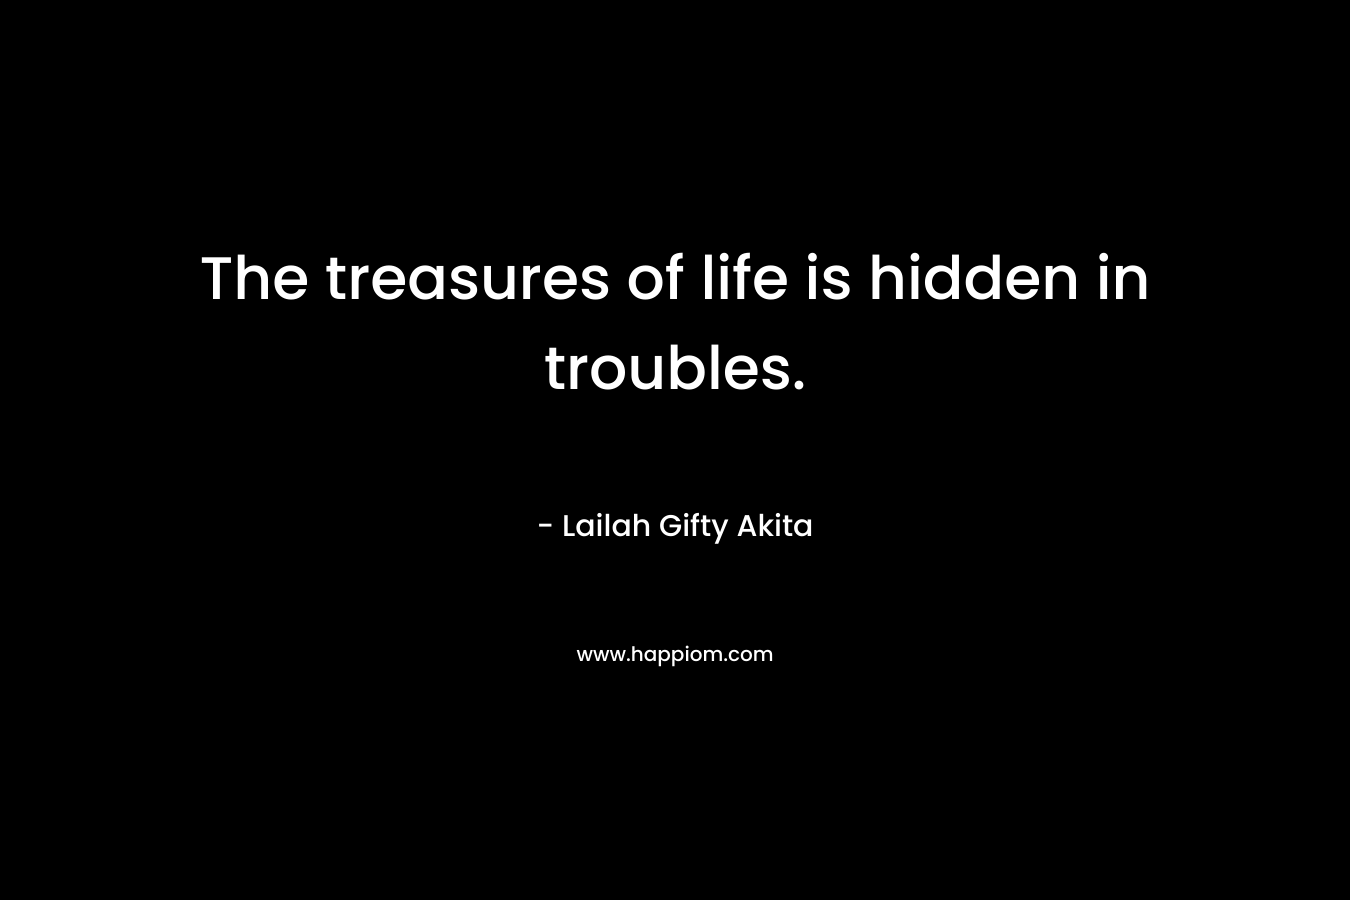 The treasures of life is hidden in troubles.